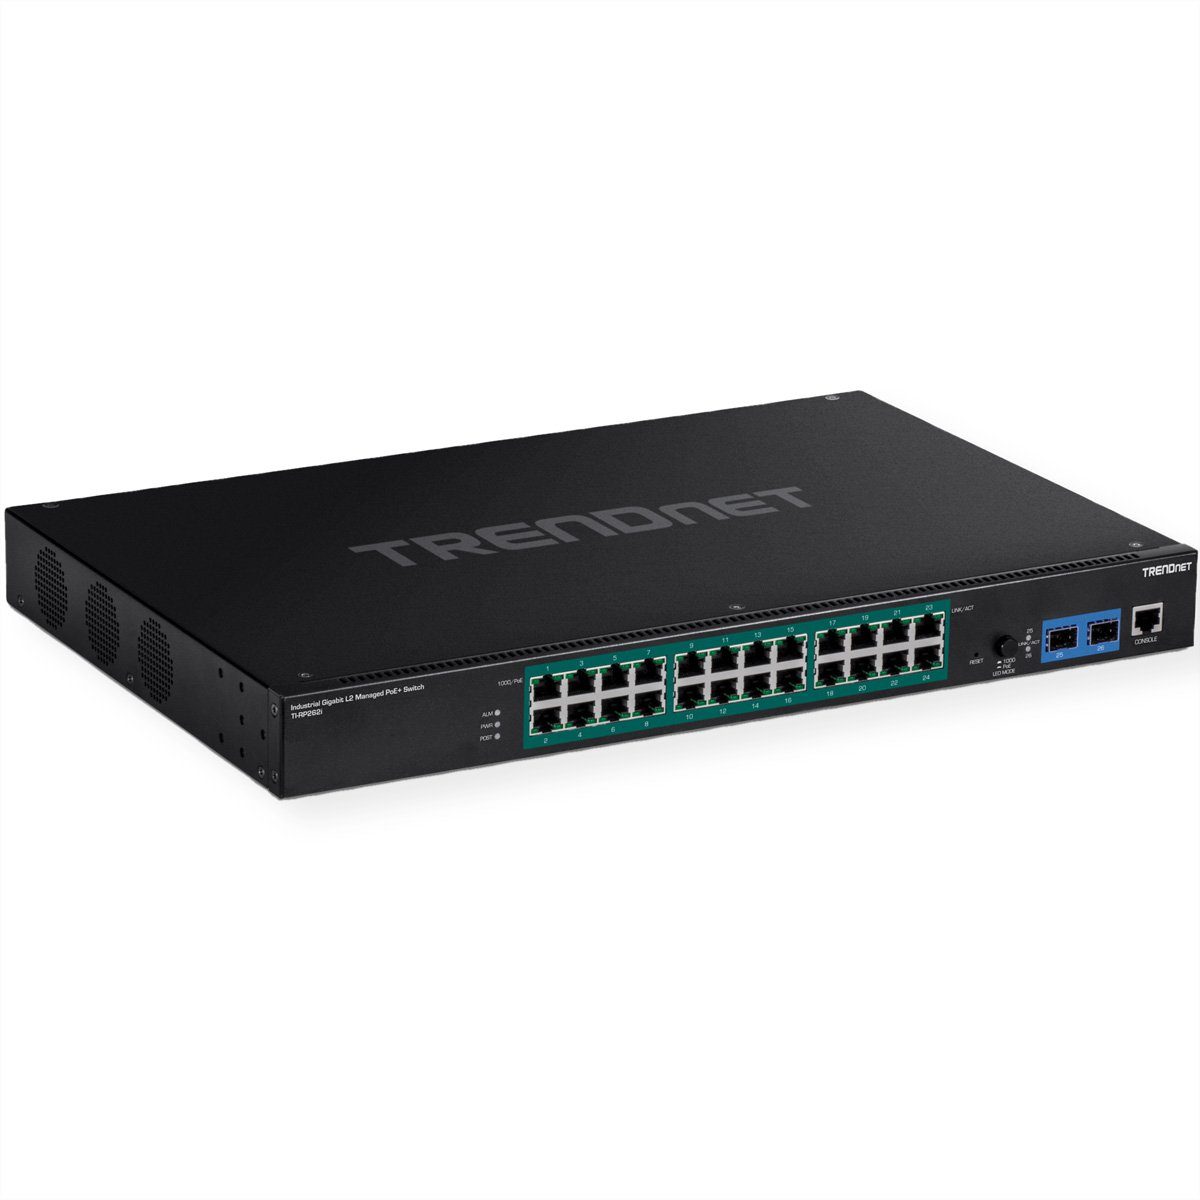 Trendnet TI-RP262i 26-Port Industrial Rackmount PoE+ Managed L2 Switch Gigabit Netzwerk-Switch